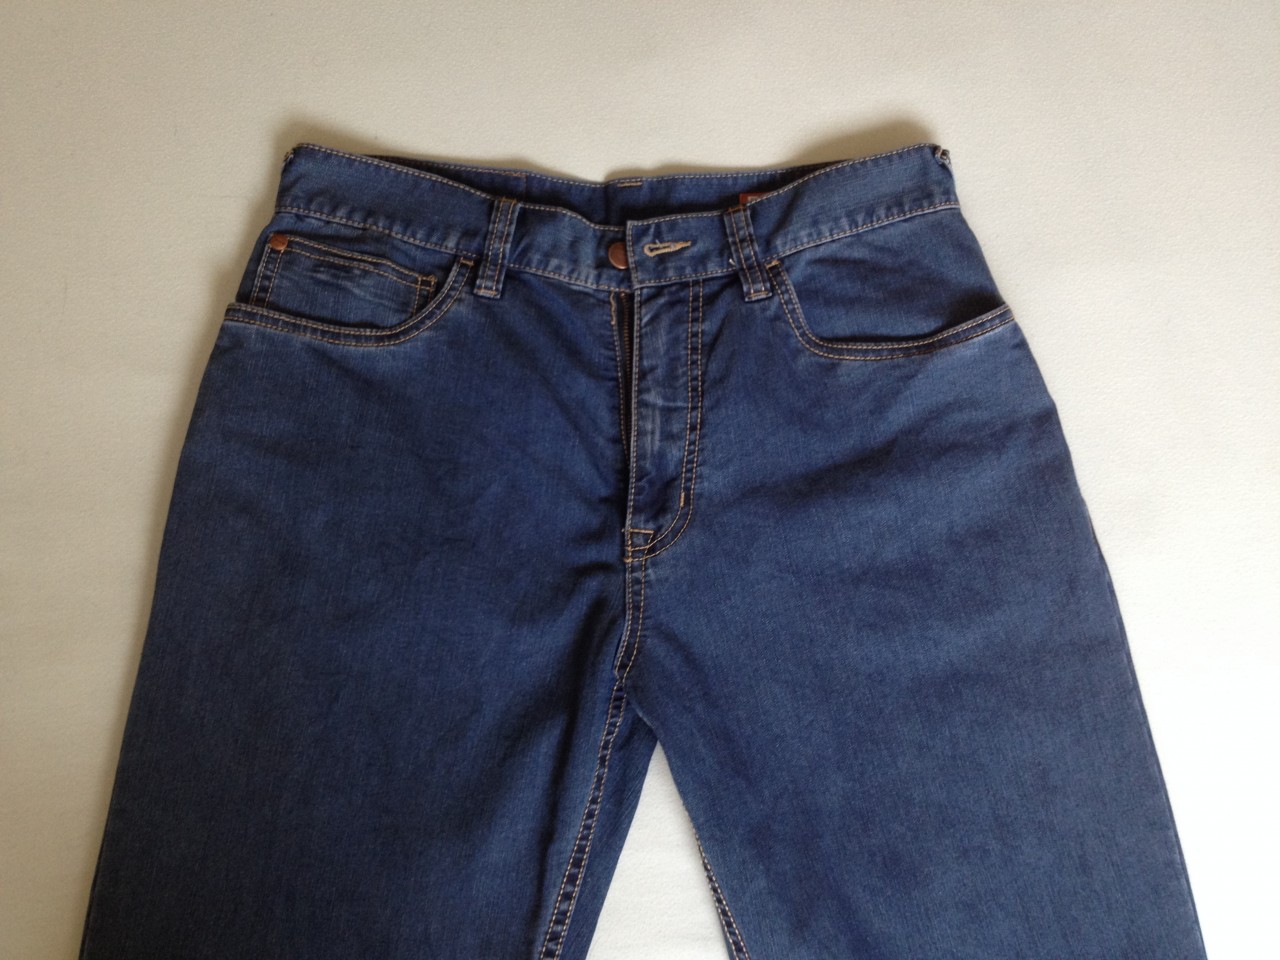 Rohan Ladies Tian Trousers Size 8S | eBay